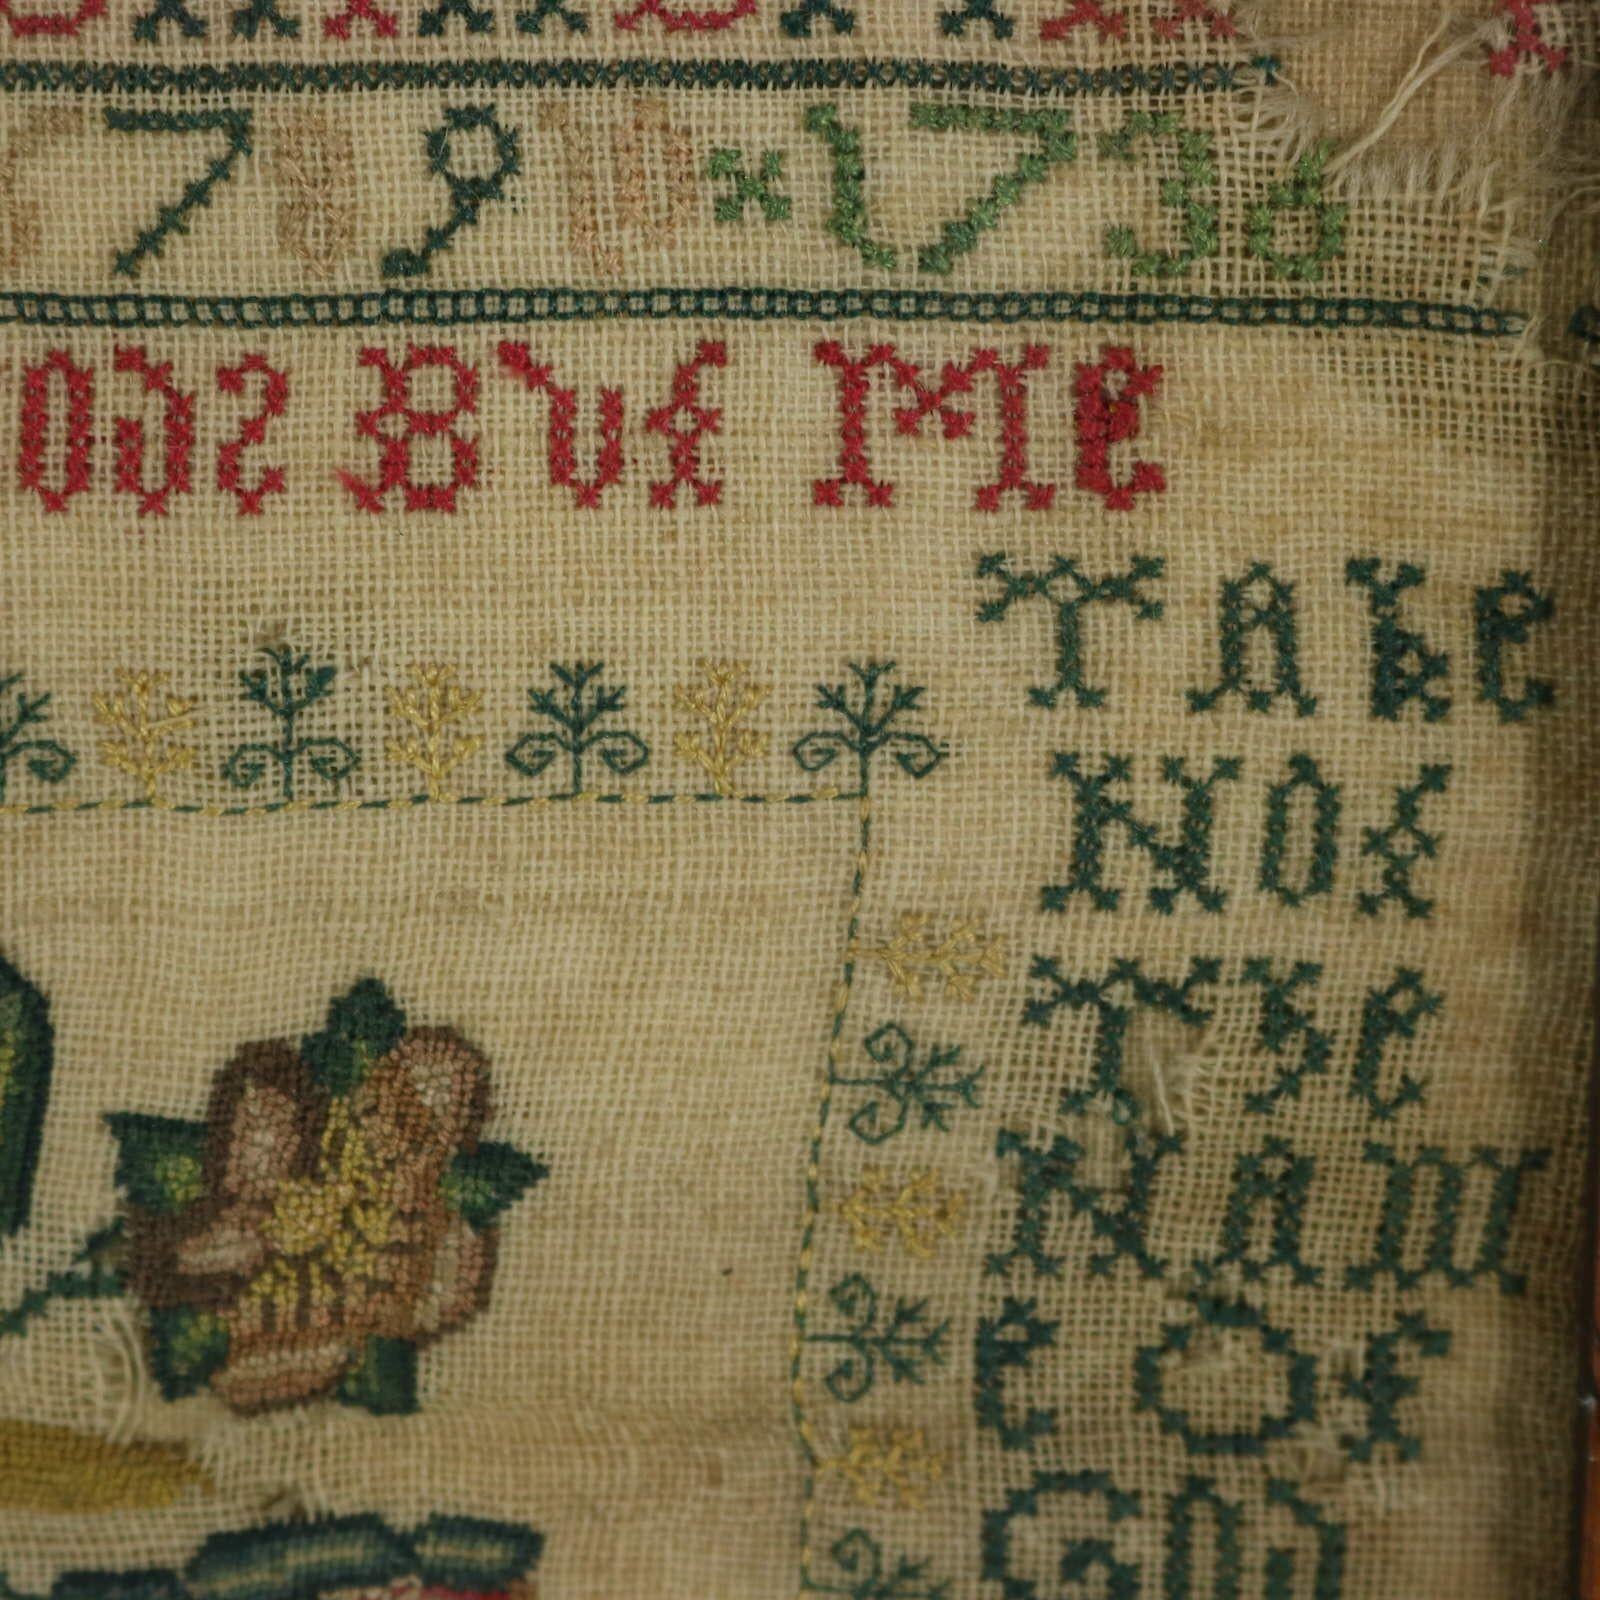 Silk Antique Sampler Stitched in 1736, Scottish For Sale